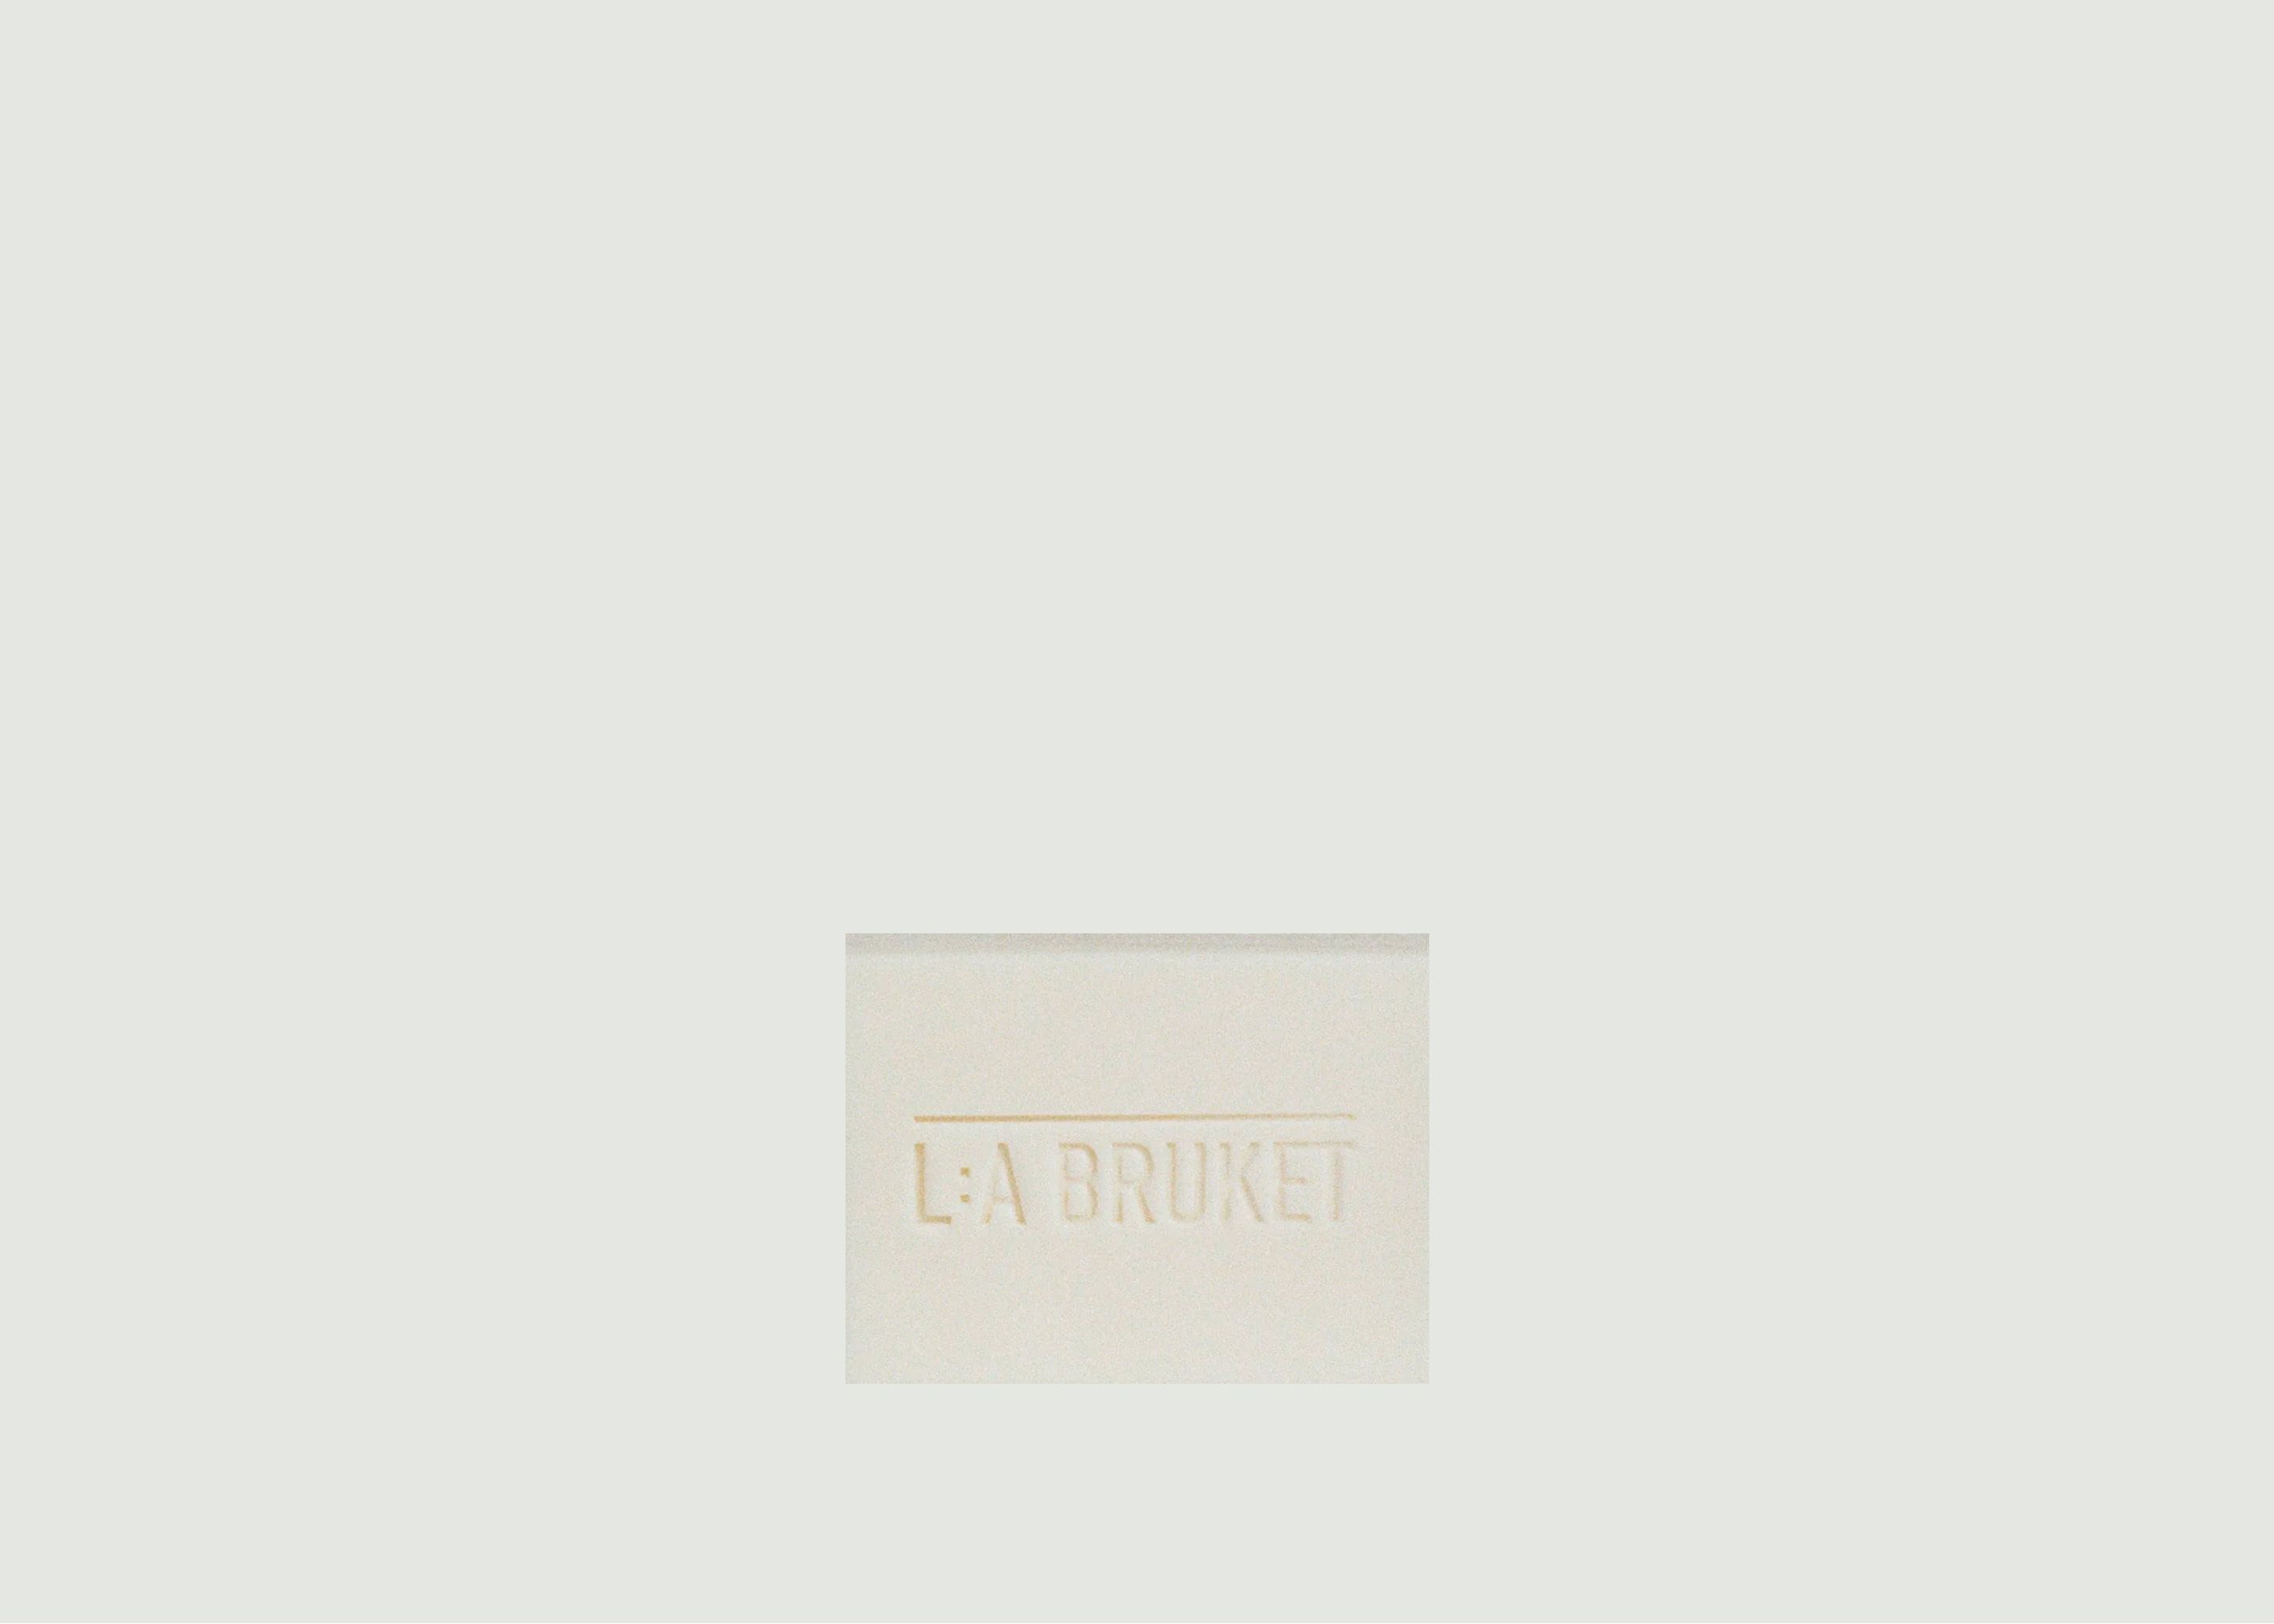 009 Soap bar - L:A Bruket